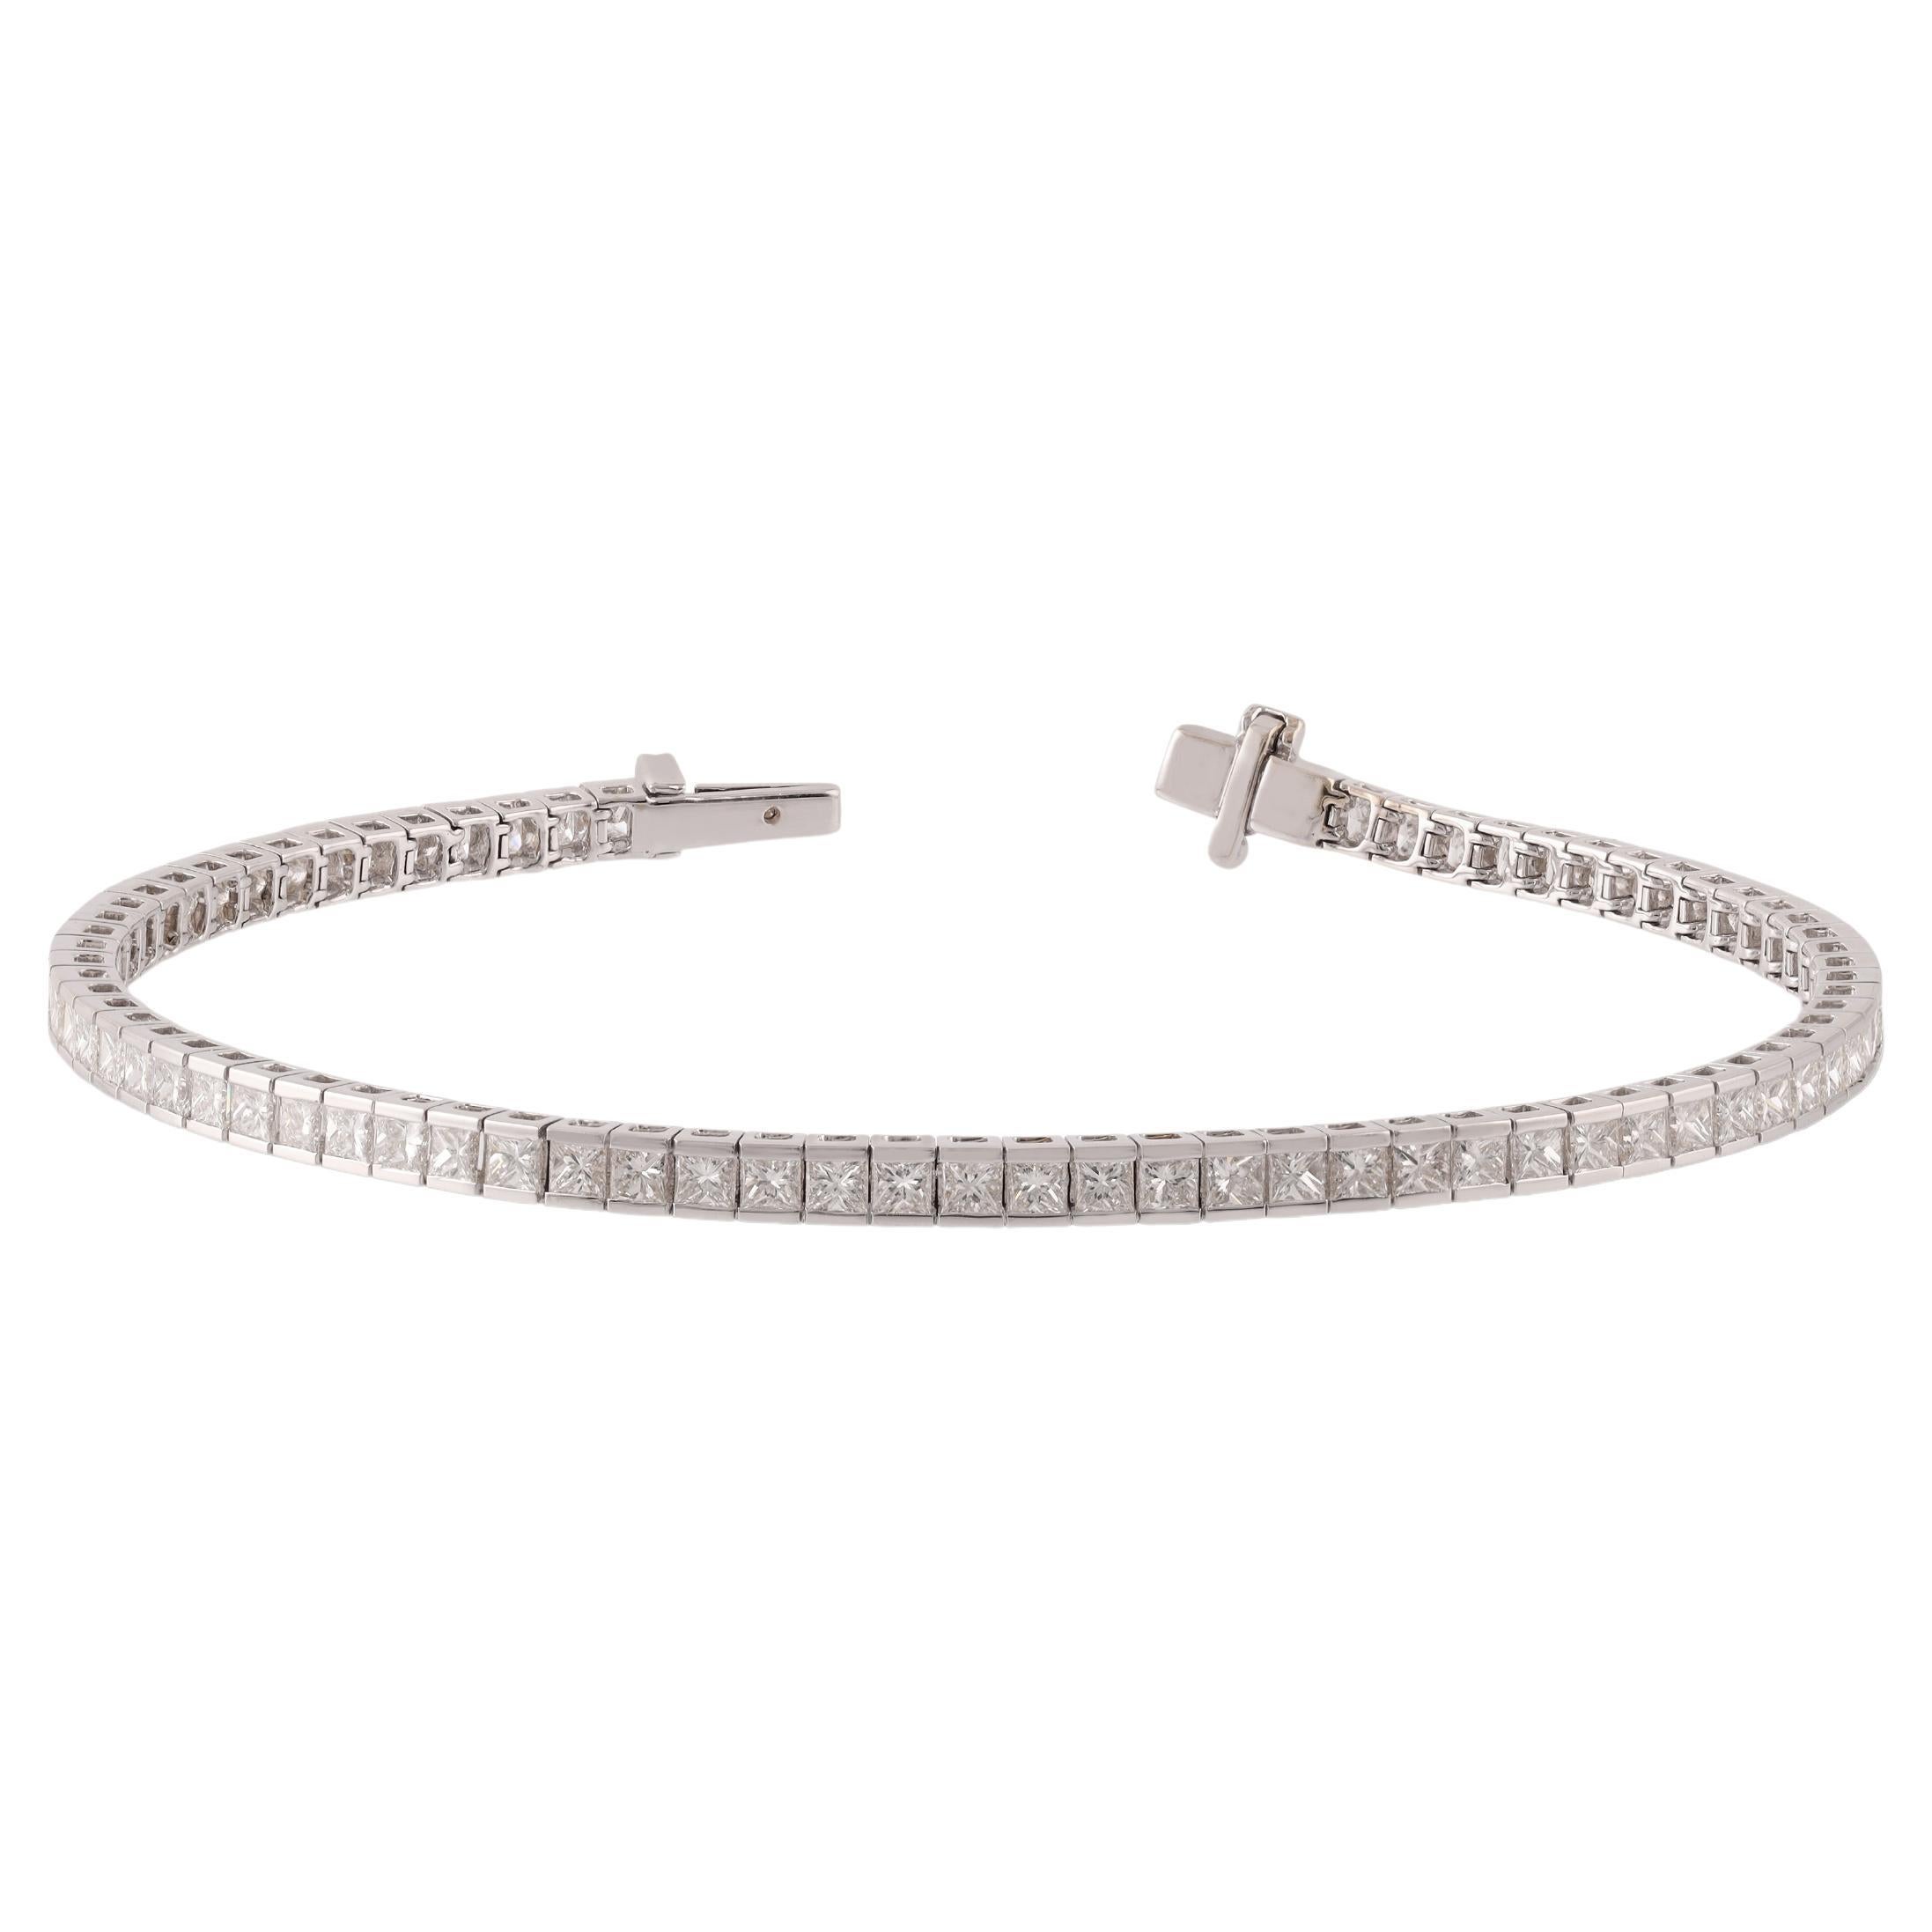 Bracelet American Diamond Studded Artistically Designed Celebrity Insp